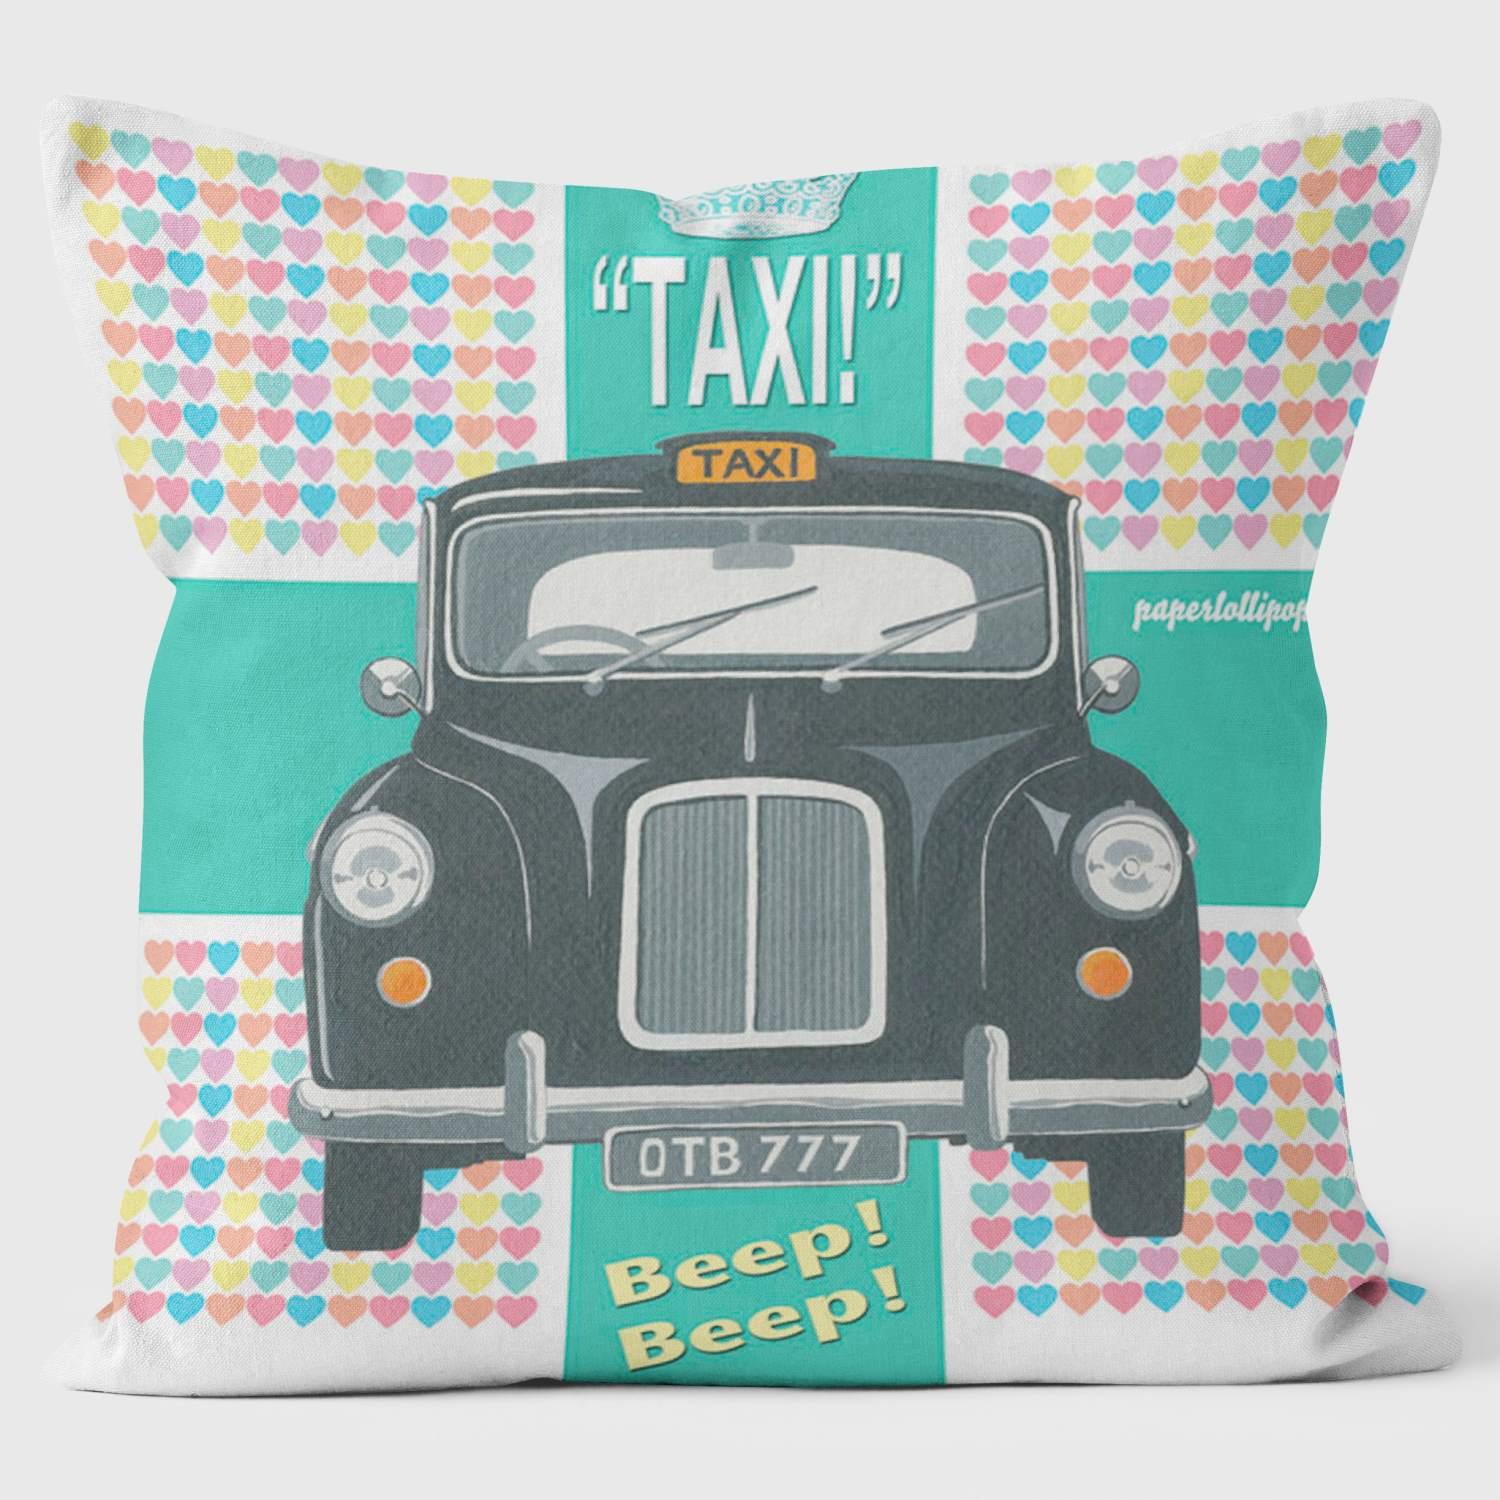 London Taxi Beep Beep! - Paperlollipop Cushion - Handmade Cushions UK - WeLoveCushions